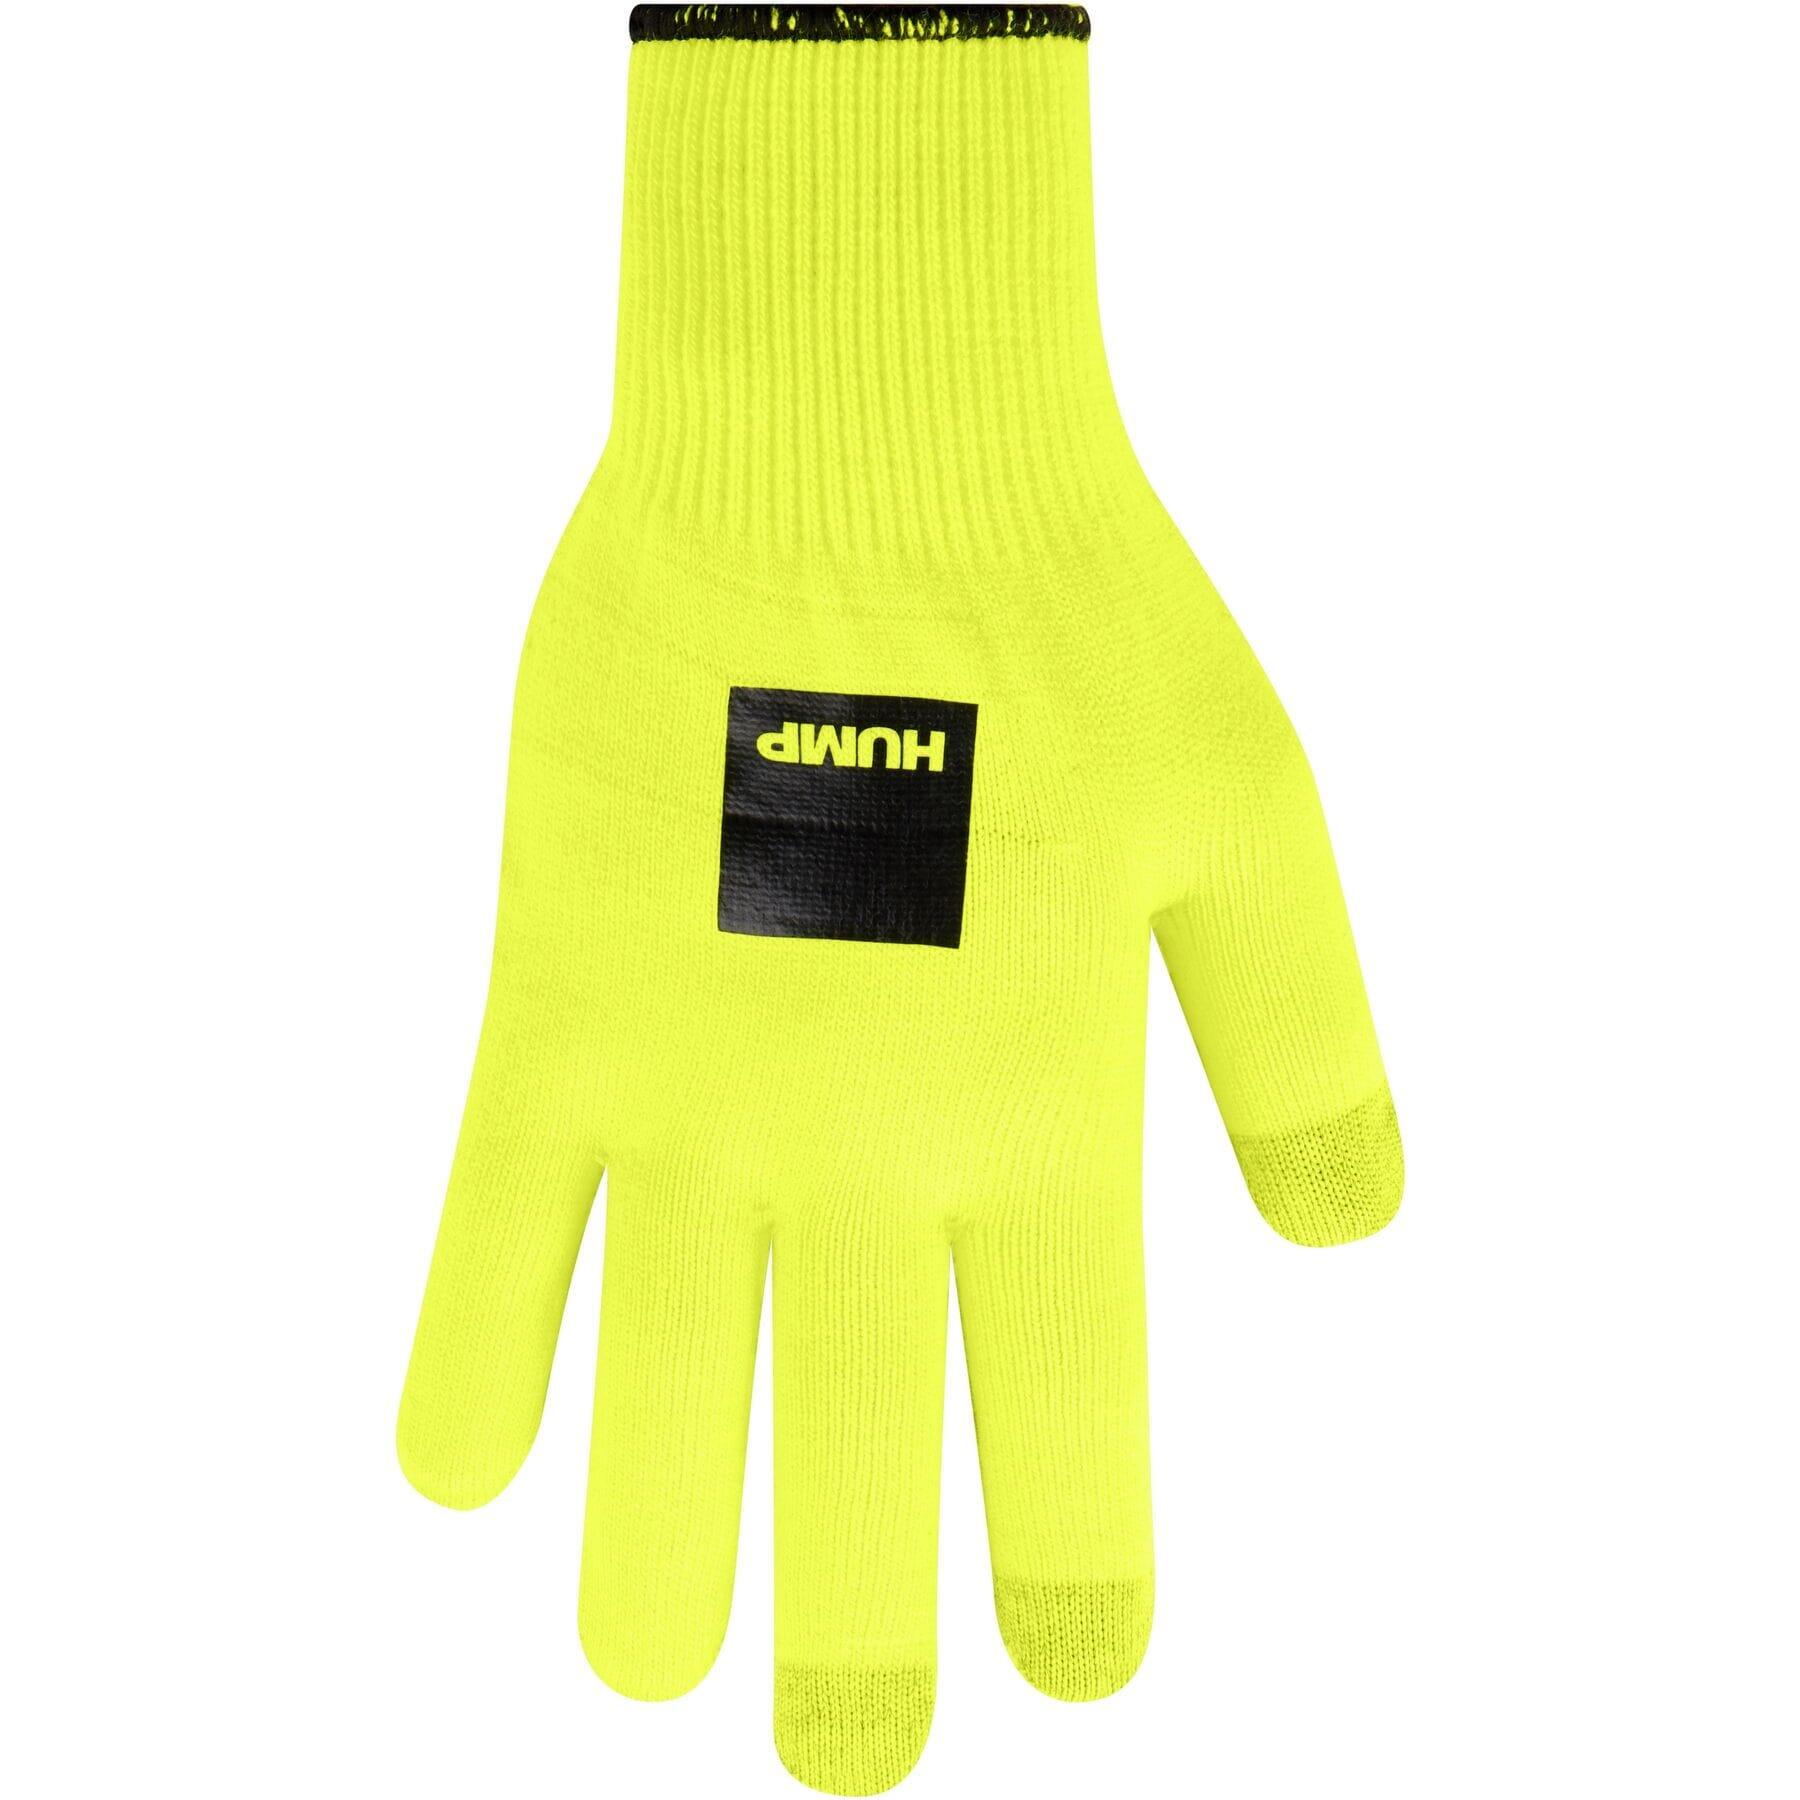 HUMP Pocket Thermal Glove - Black / Hi-Viz Yellow - X-Large - XX-Large 1/2